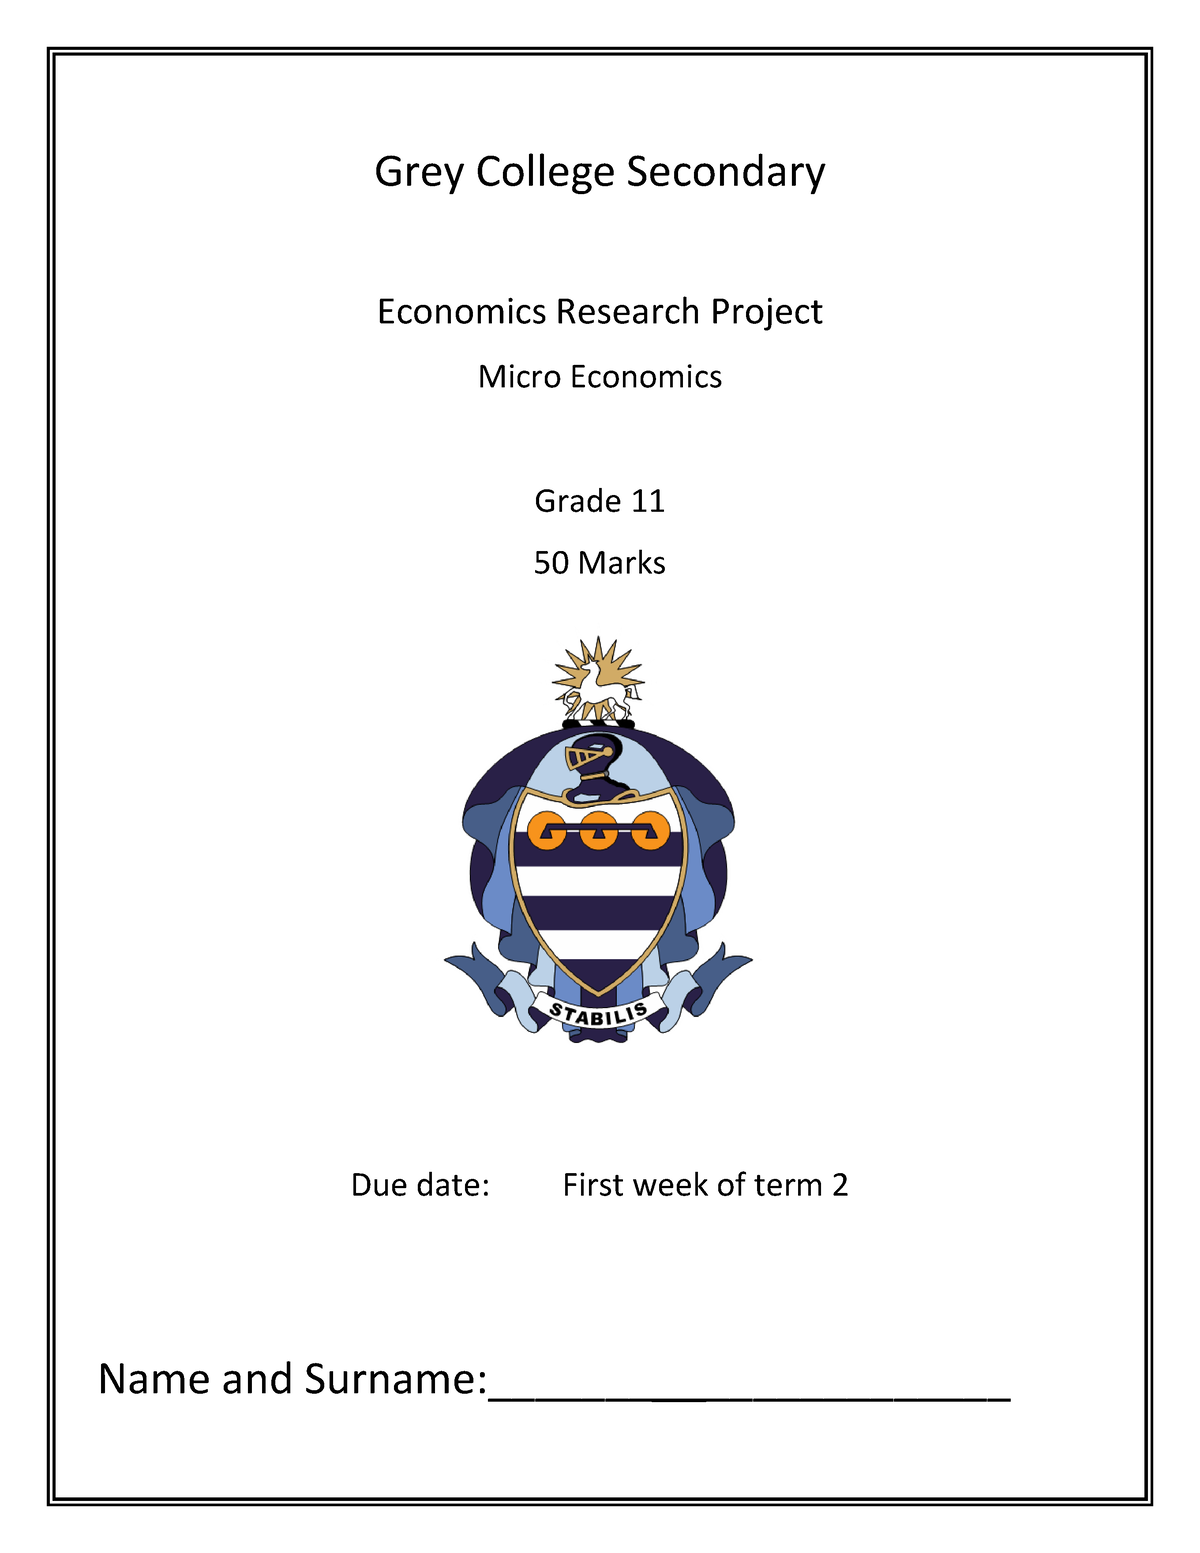 economics research project grade 11 term 2